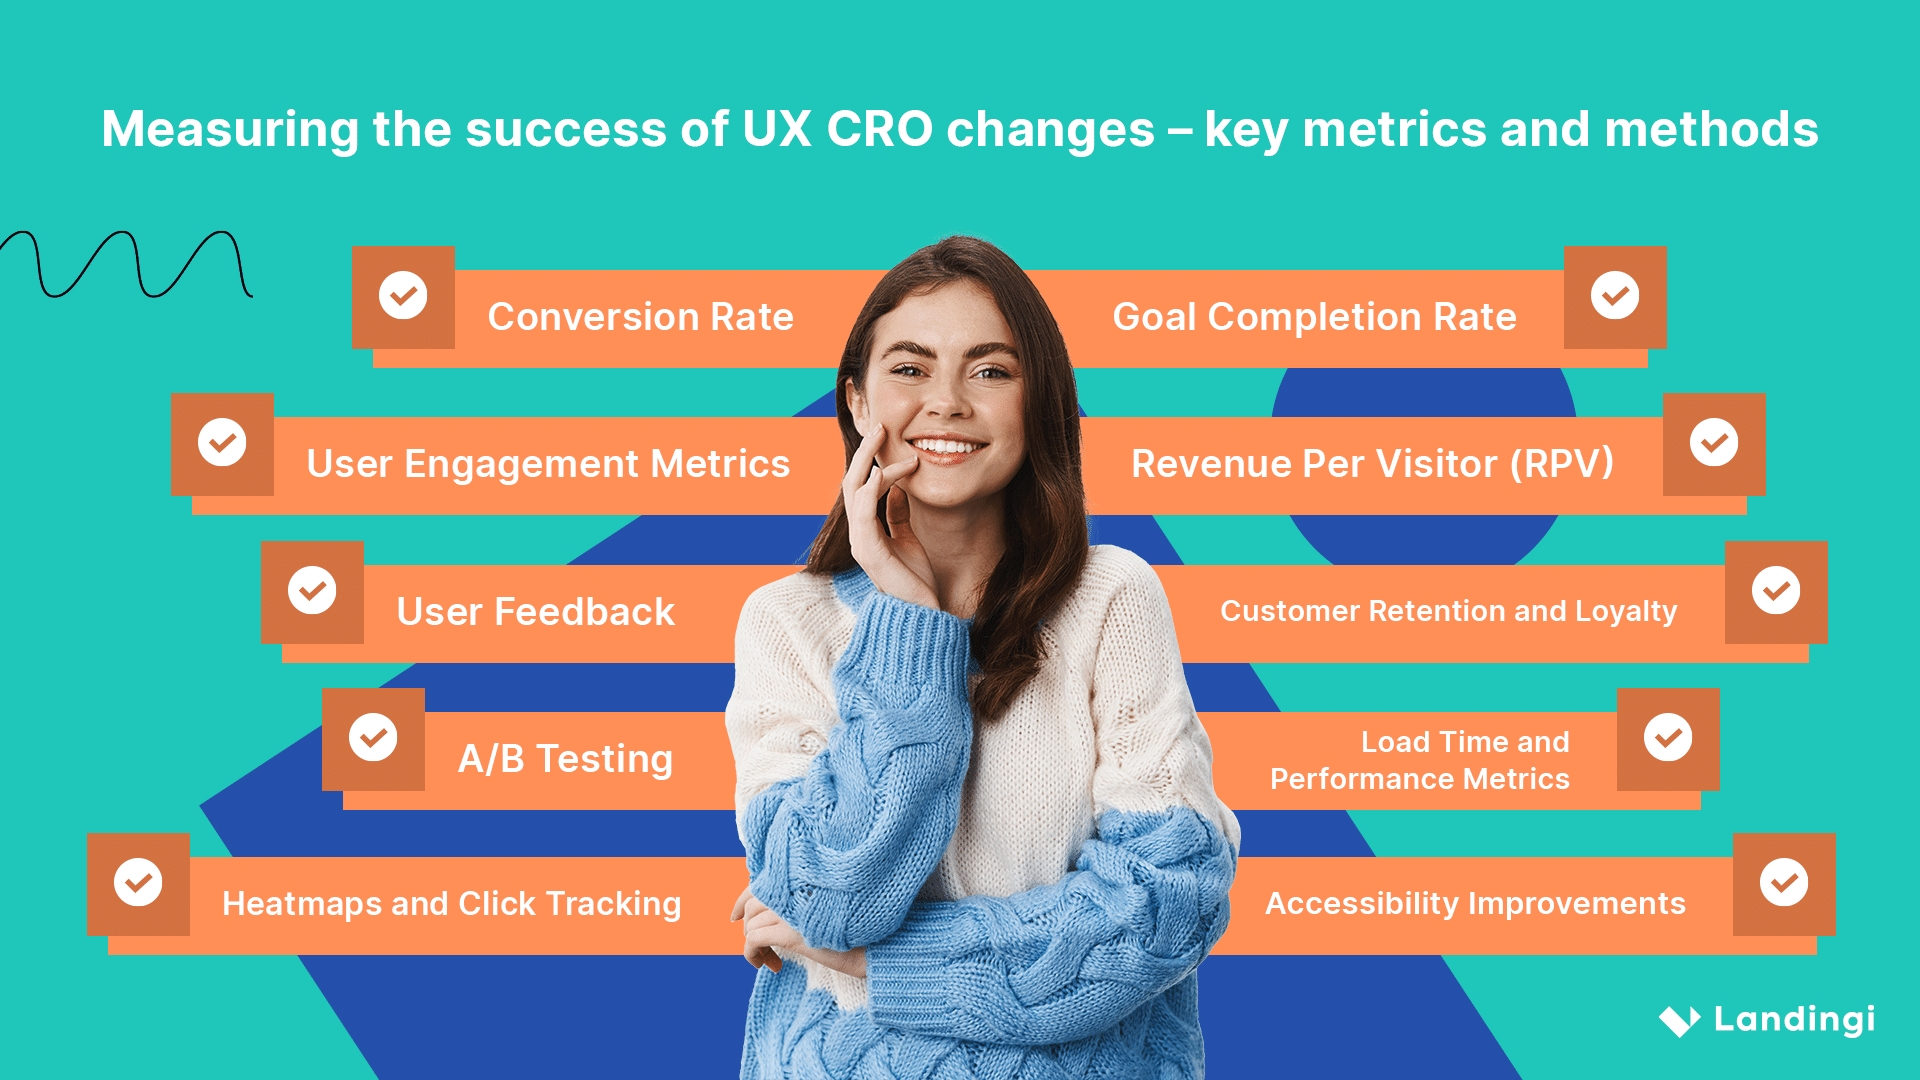 Metryki i metody mierzenia sukcesu zmian UX CRO